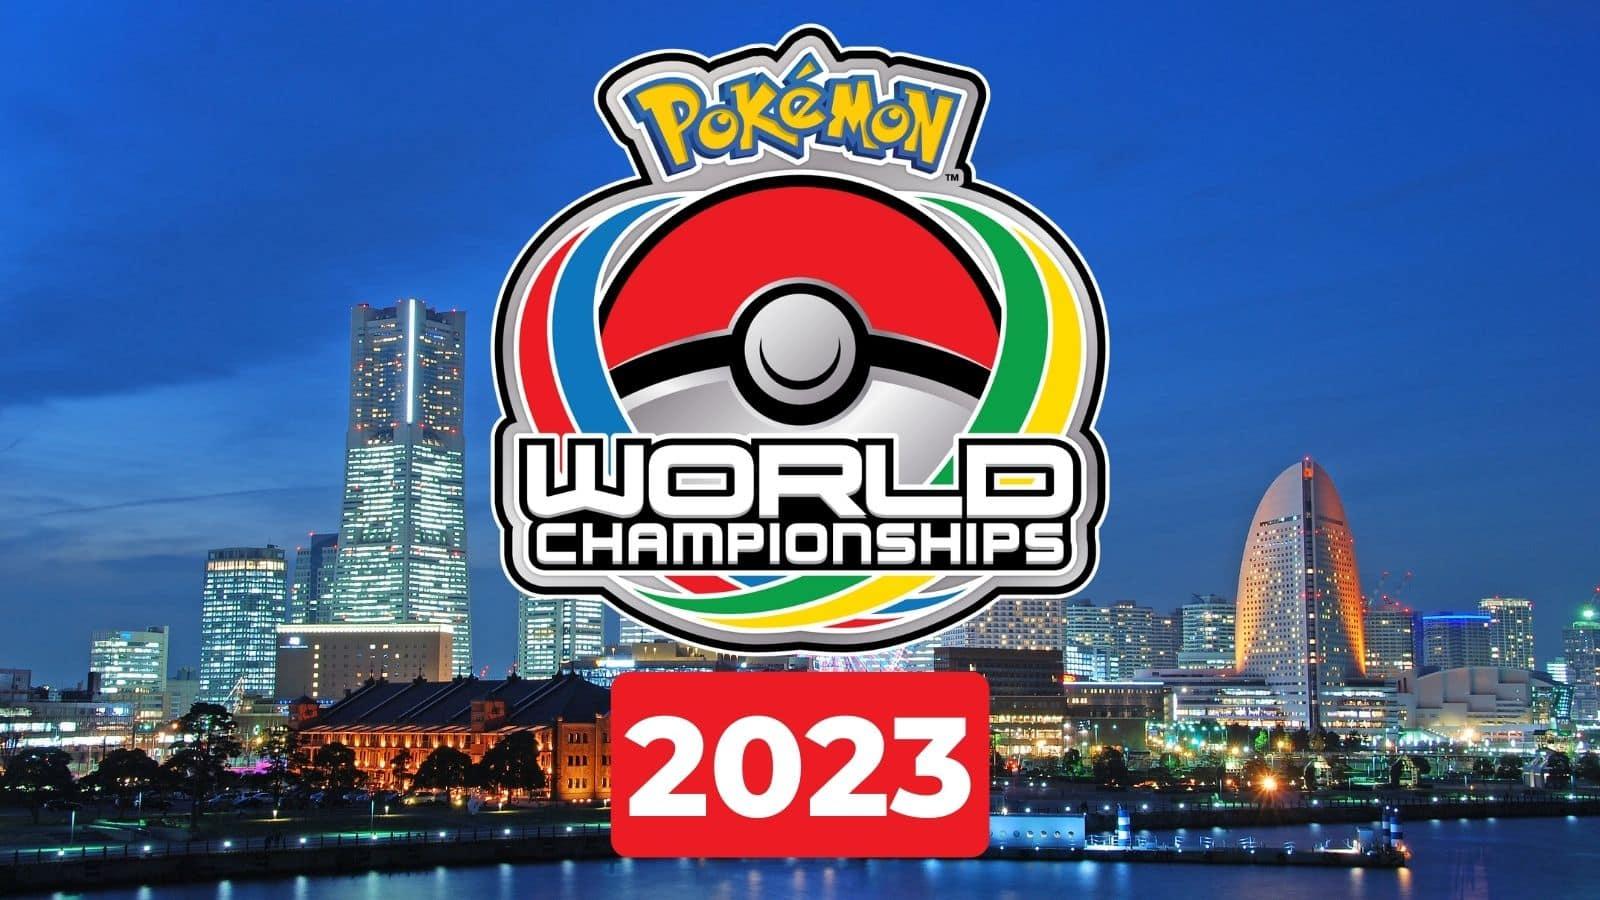 pokemon world championship 2023 yokohama header image